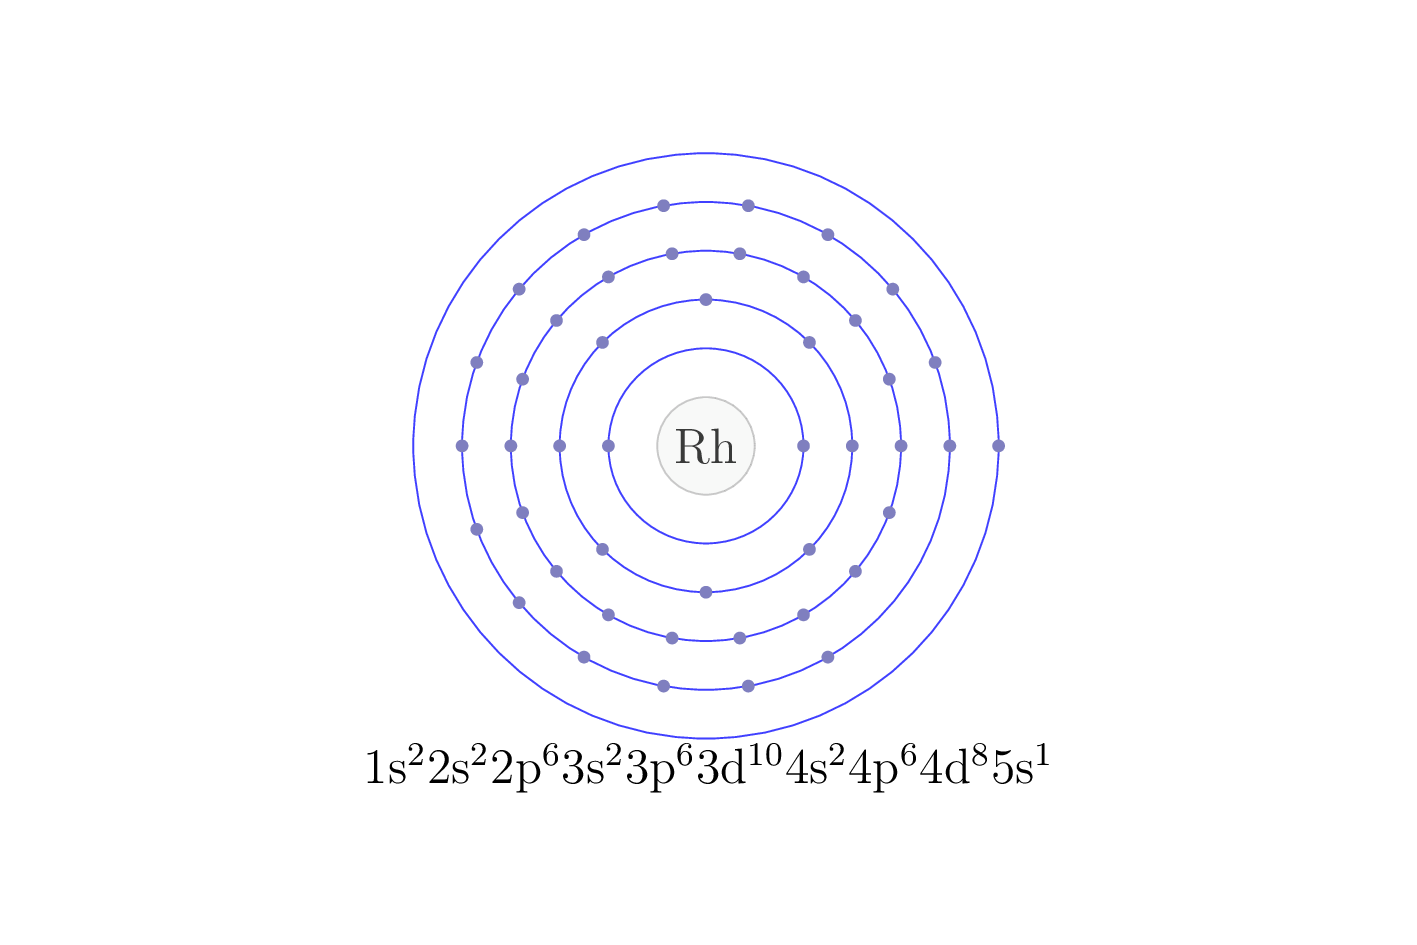 electron configuration of element Rh